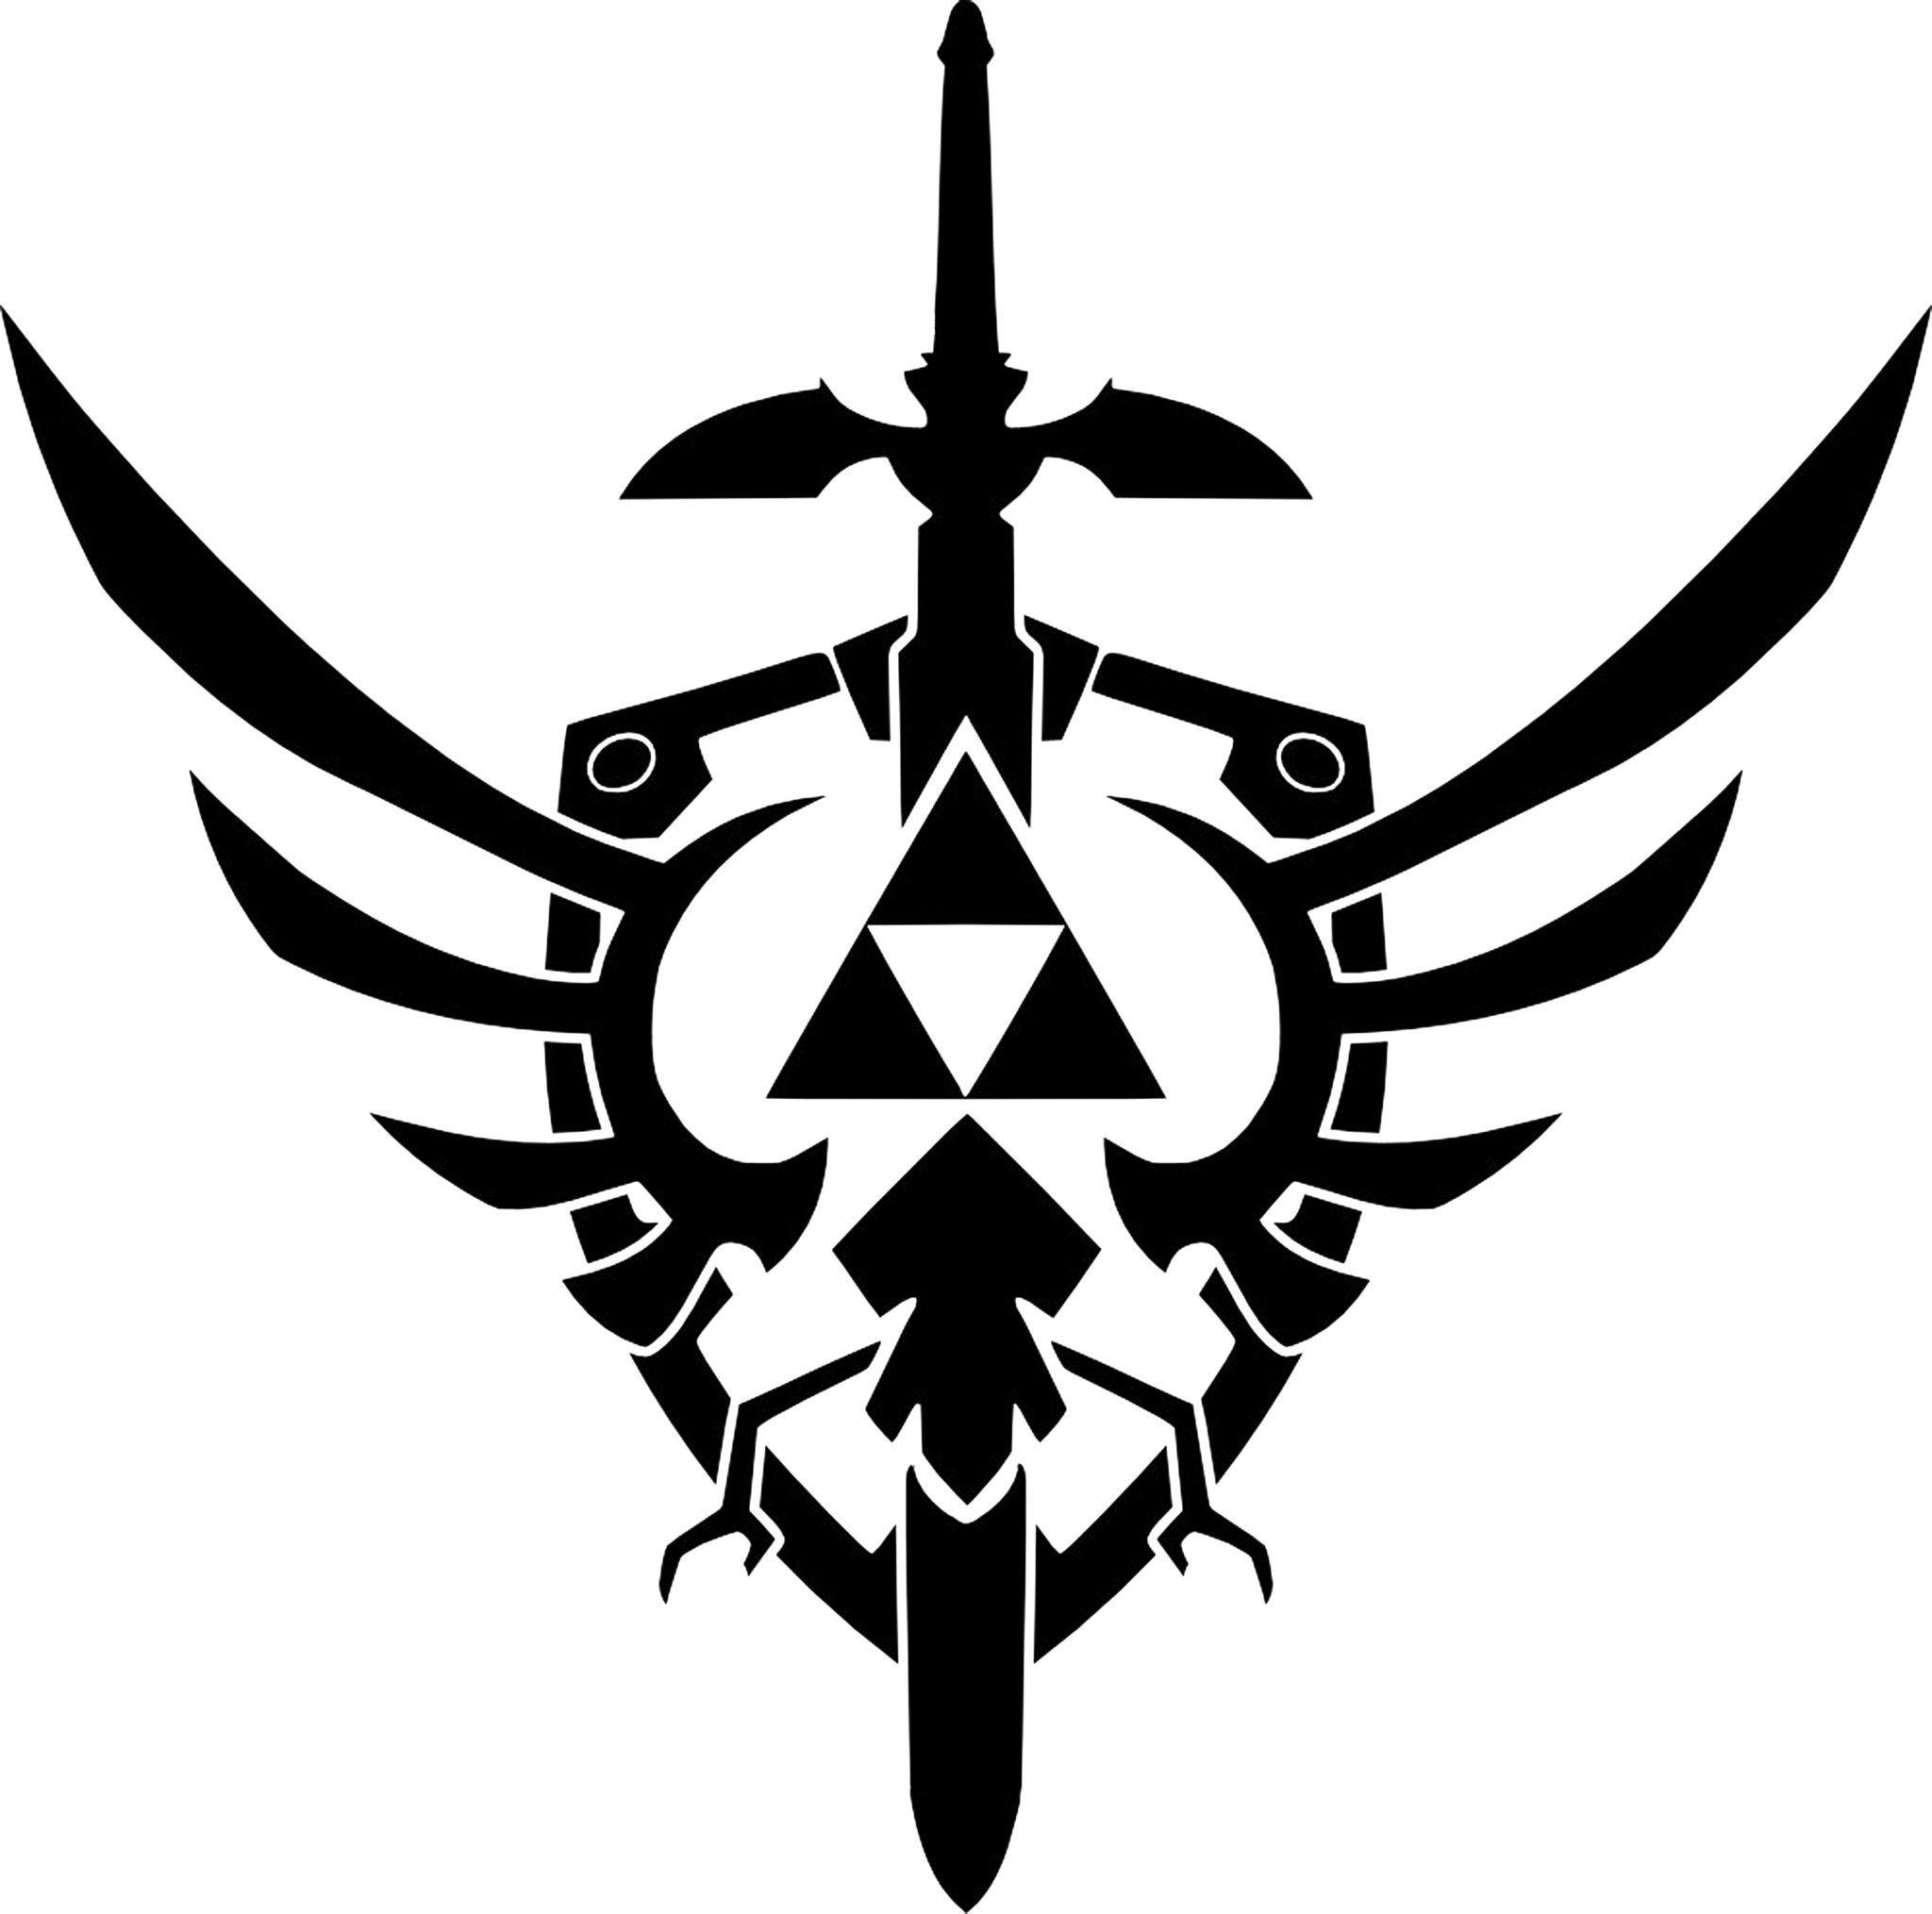 Zelda Triangle Logo - Zelda triforce, master sword and shield. Cool idea for a tattoo ...